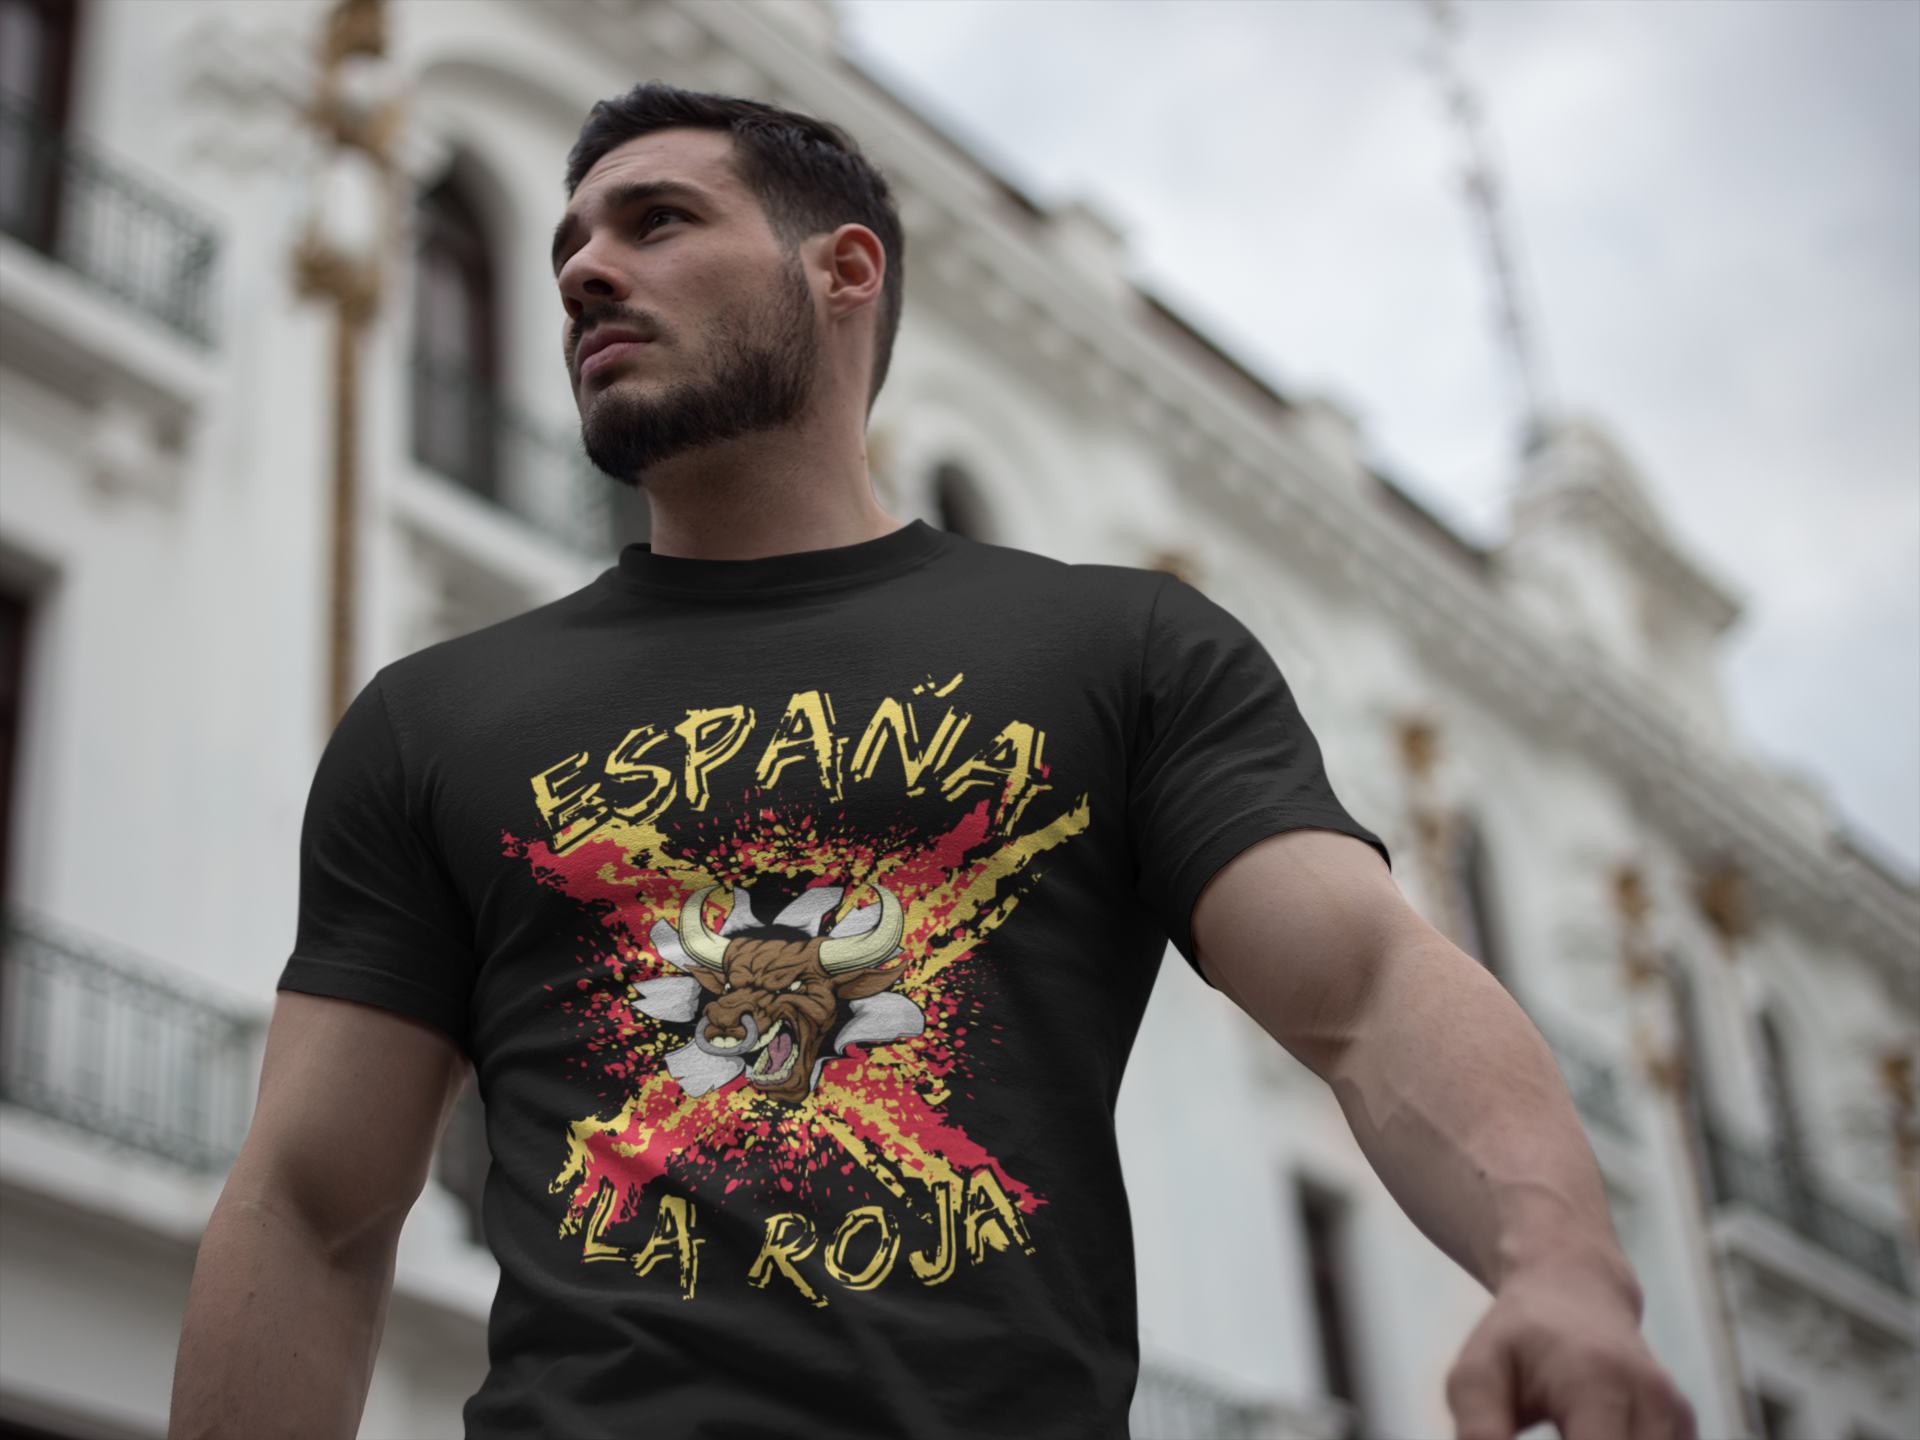 "España, La Roja" Short-Sleeve Unisex T-Shirt